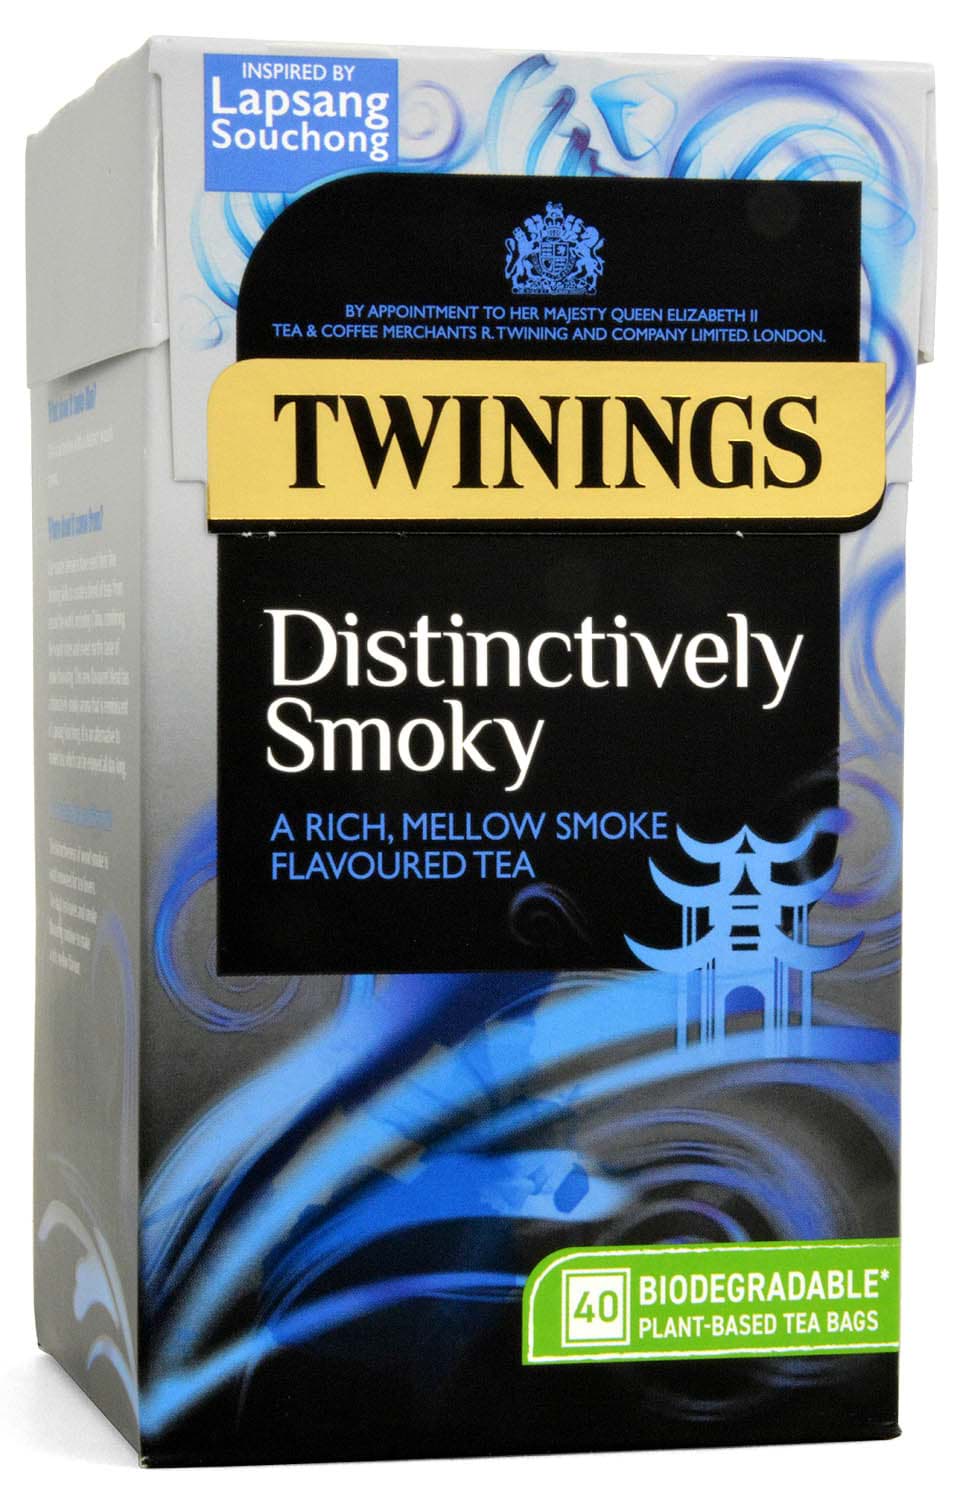 Bild von Twinings Distinctively Smoky Tea 40 Bags 100g